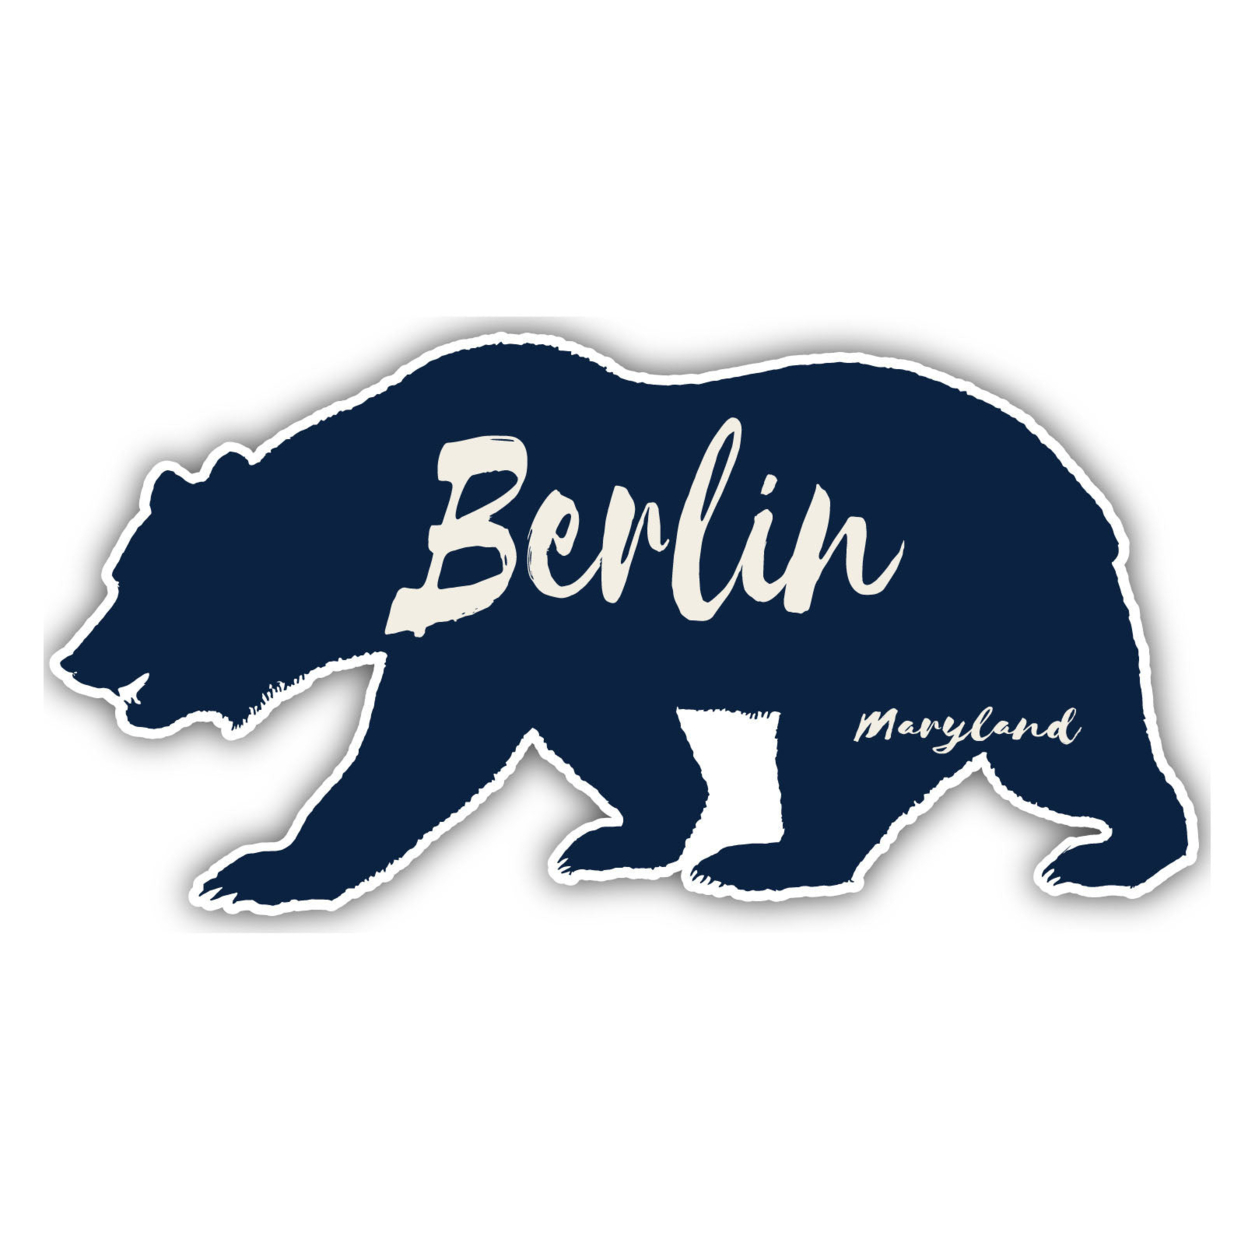 Berlin Maryland Souvenir Decorative Stickers (Choose Theme And Size) - Single Unit, 6-Inch, Bear